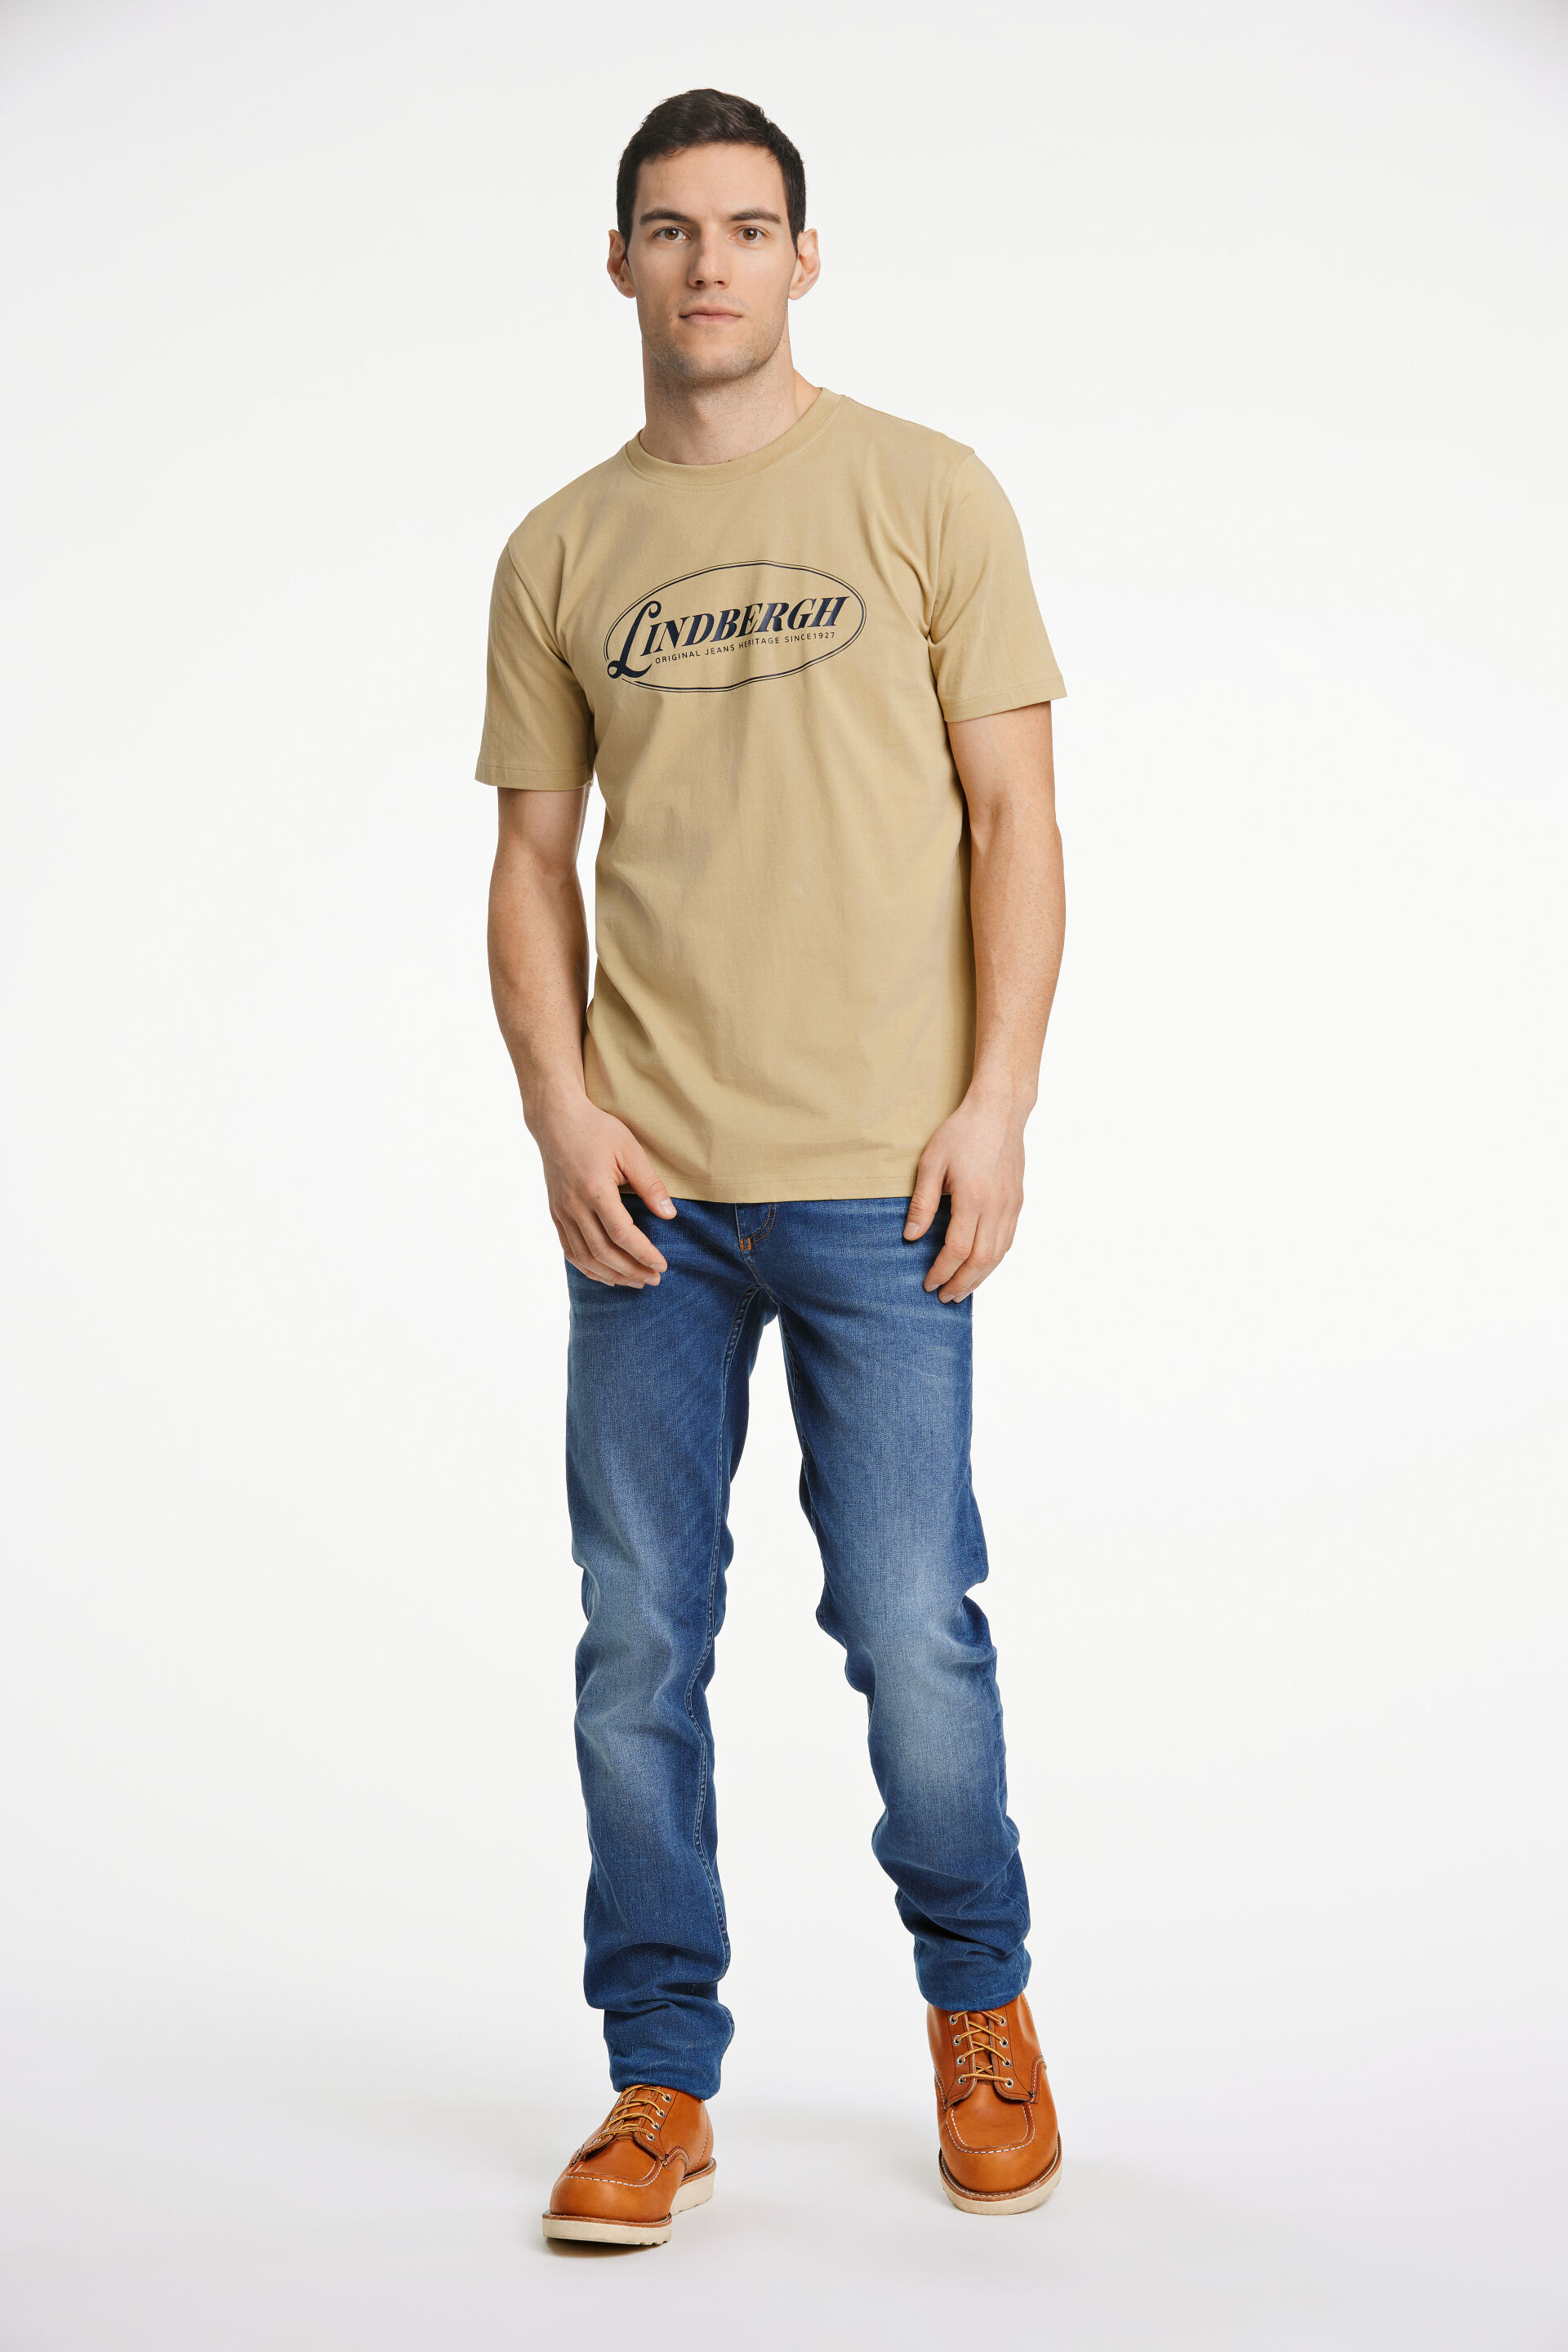 Lindbergh  T-shirt 30-420161